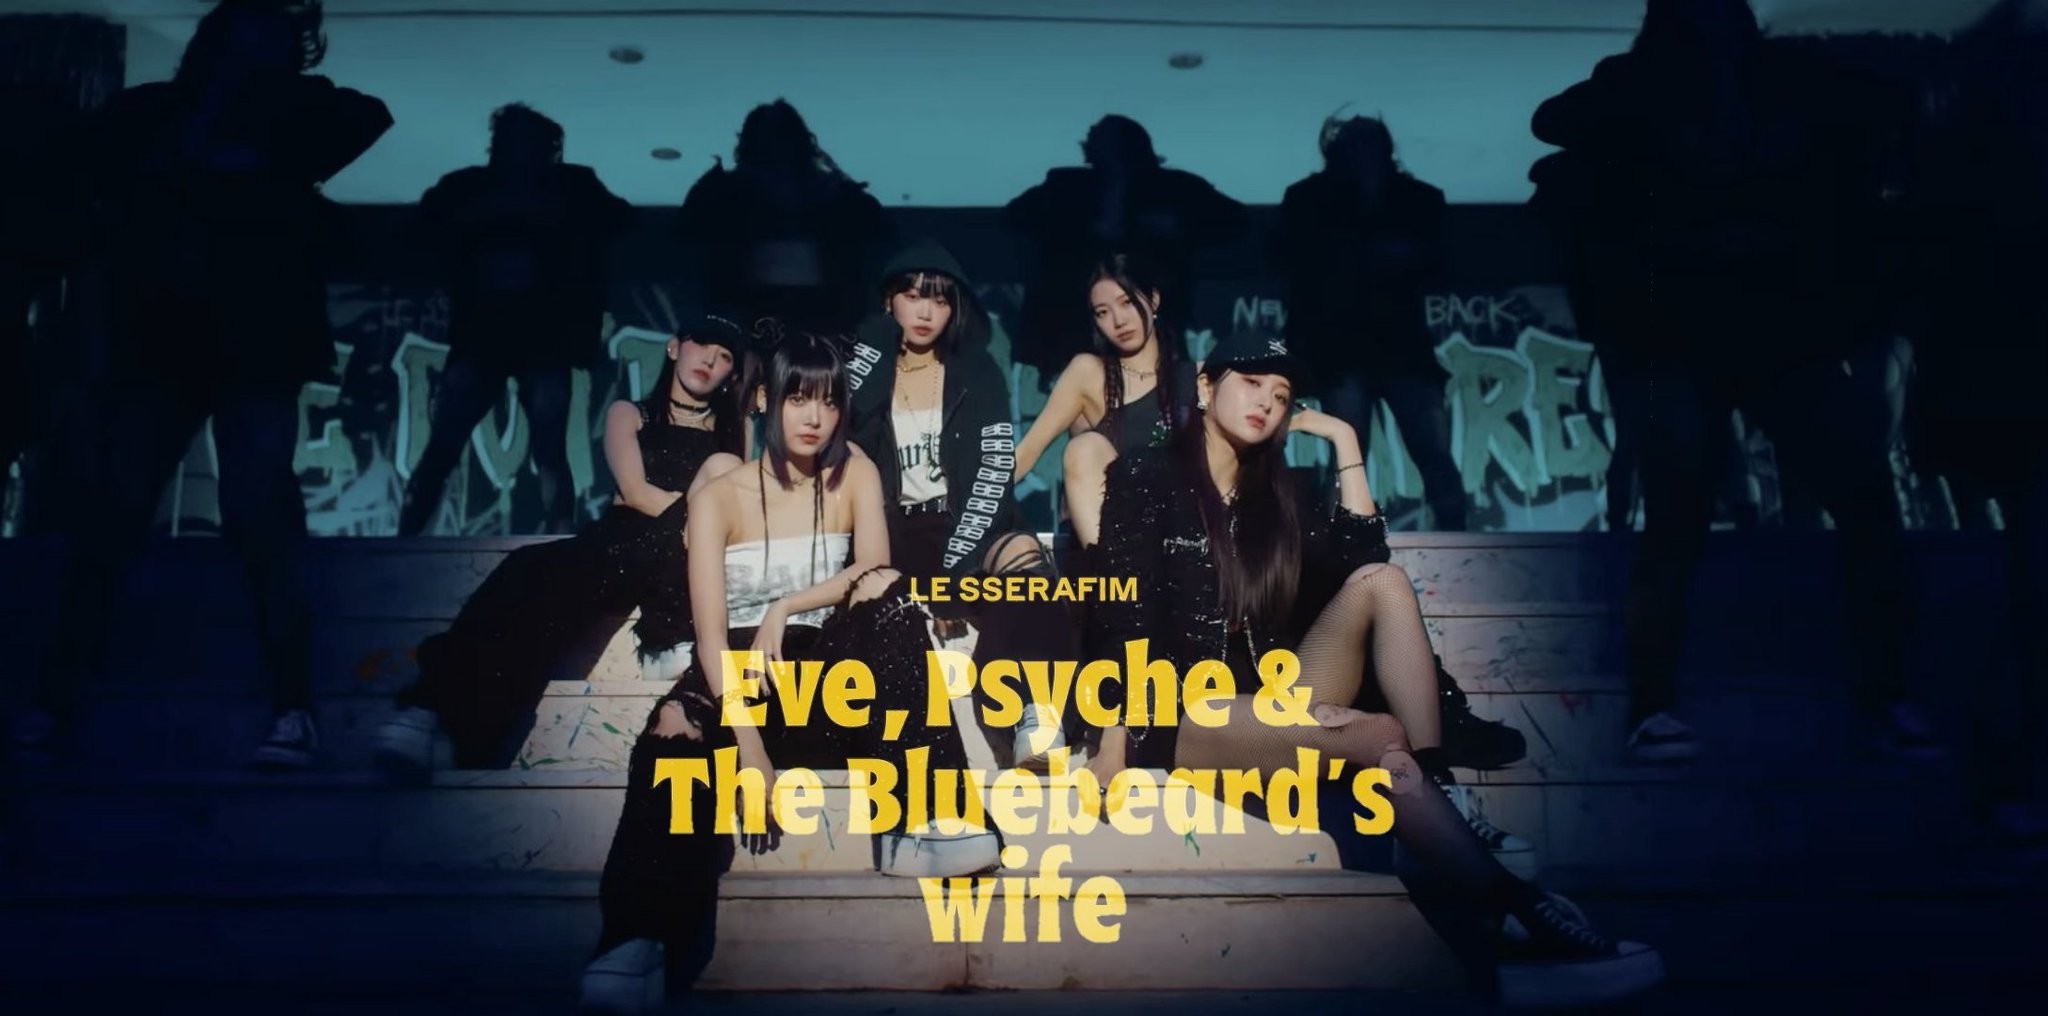 Eve psyche bluebeards wife le sserafim. Eve Psyche and the Bluebeard's wife. Eve Psyche le Serafim. Le sserafim(르세라핌)- 'Eve, Psyche & the Bluebeard's wife'. Eve, Psyche & the Bluebeard’s wife обложка.